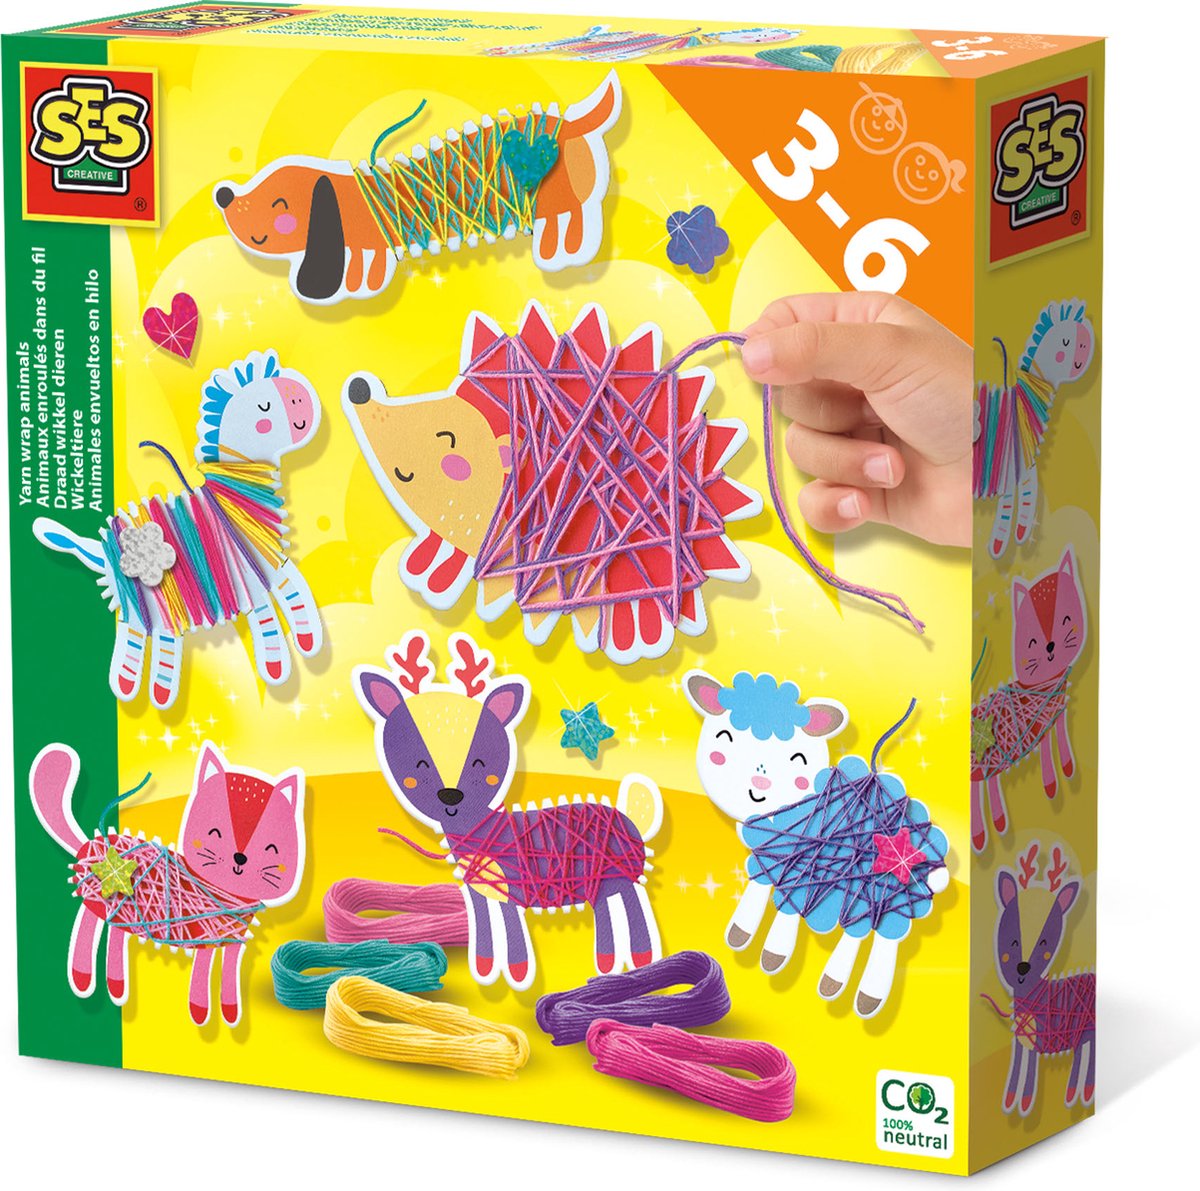   - Draad wikkel dieren - met glitter stickers en 5 heldere kleuren draad - 6 wikkel dieren